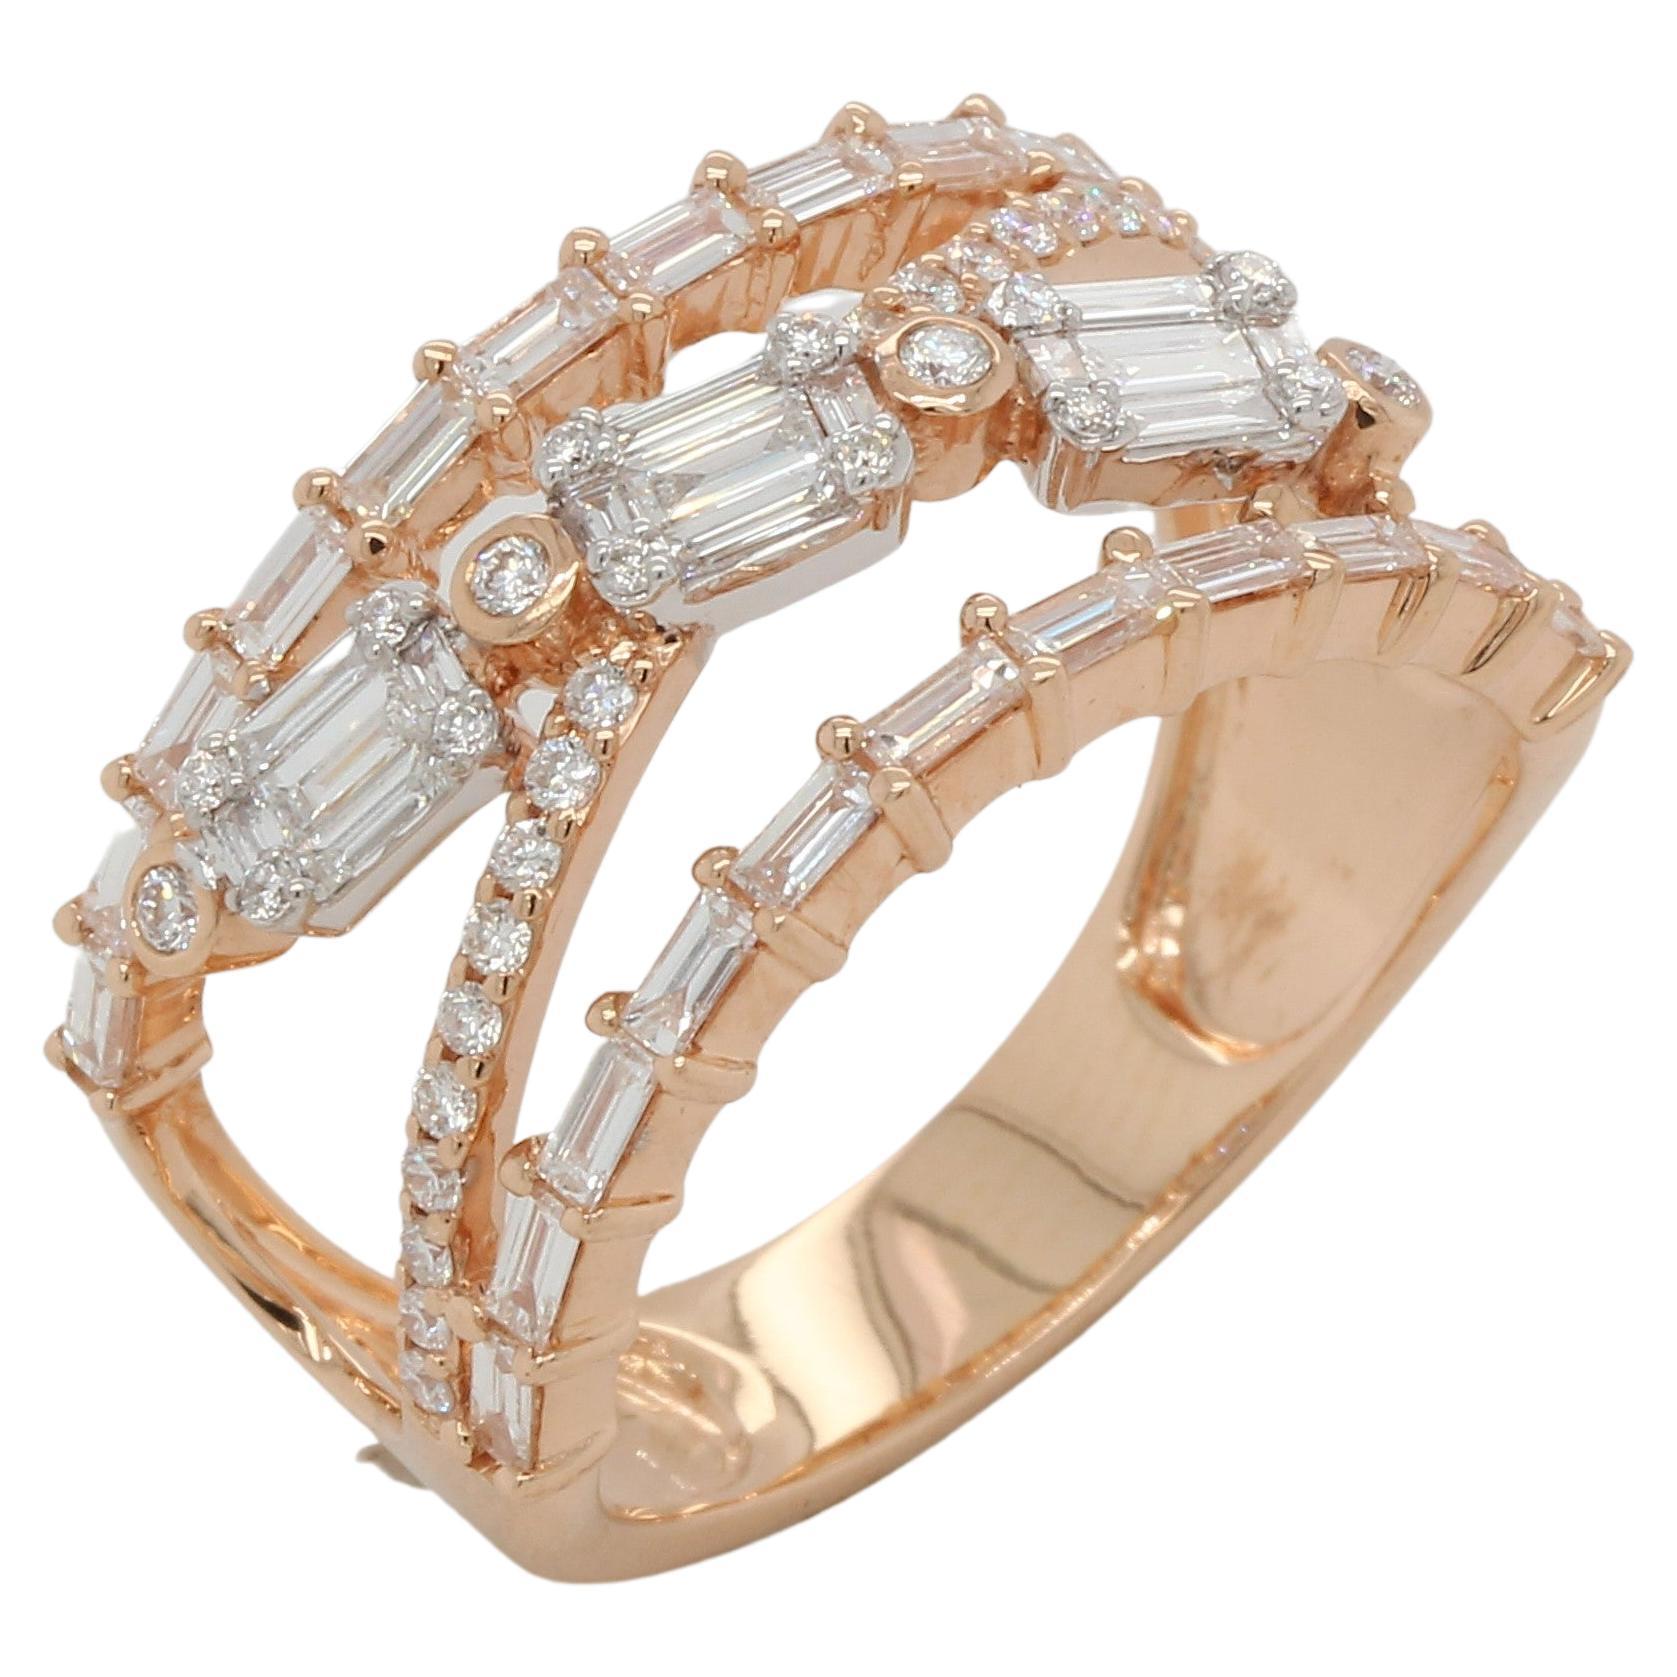 0.98 Carats Diamond Illusion Wedding Ring In 18 Karat Gold For Sale